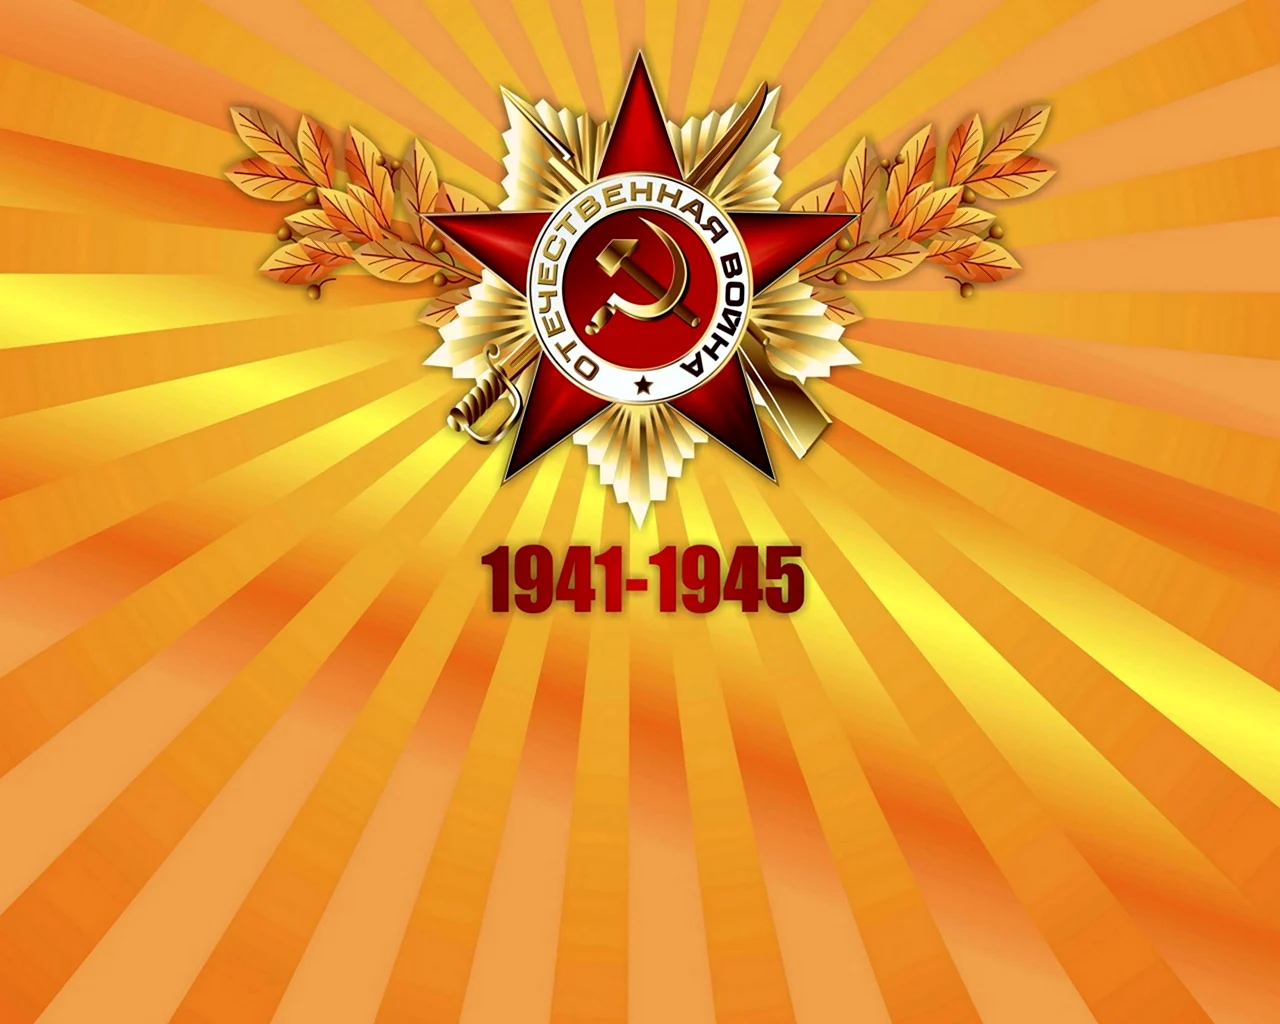 Помним чтим гордимся 1941-1945